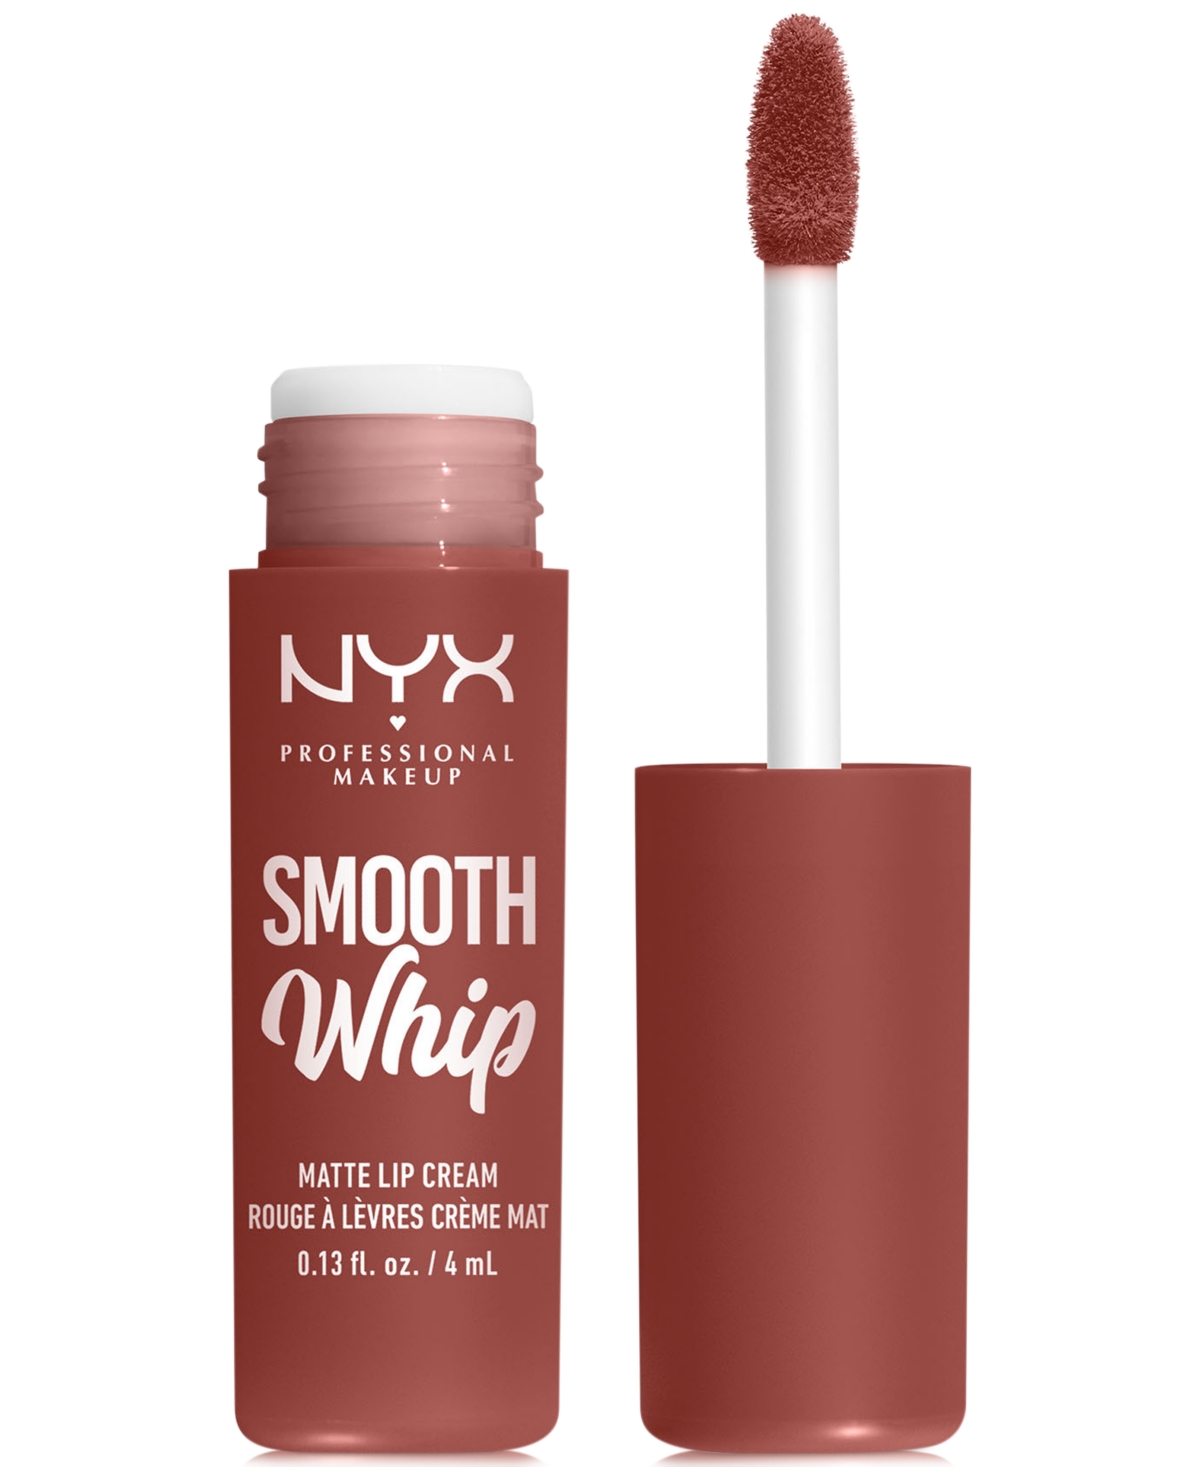 Smooth Whip Matte Lip Cream - Memory Foam